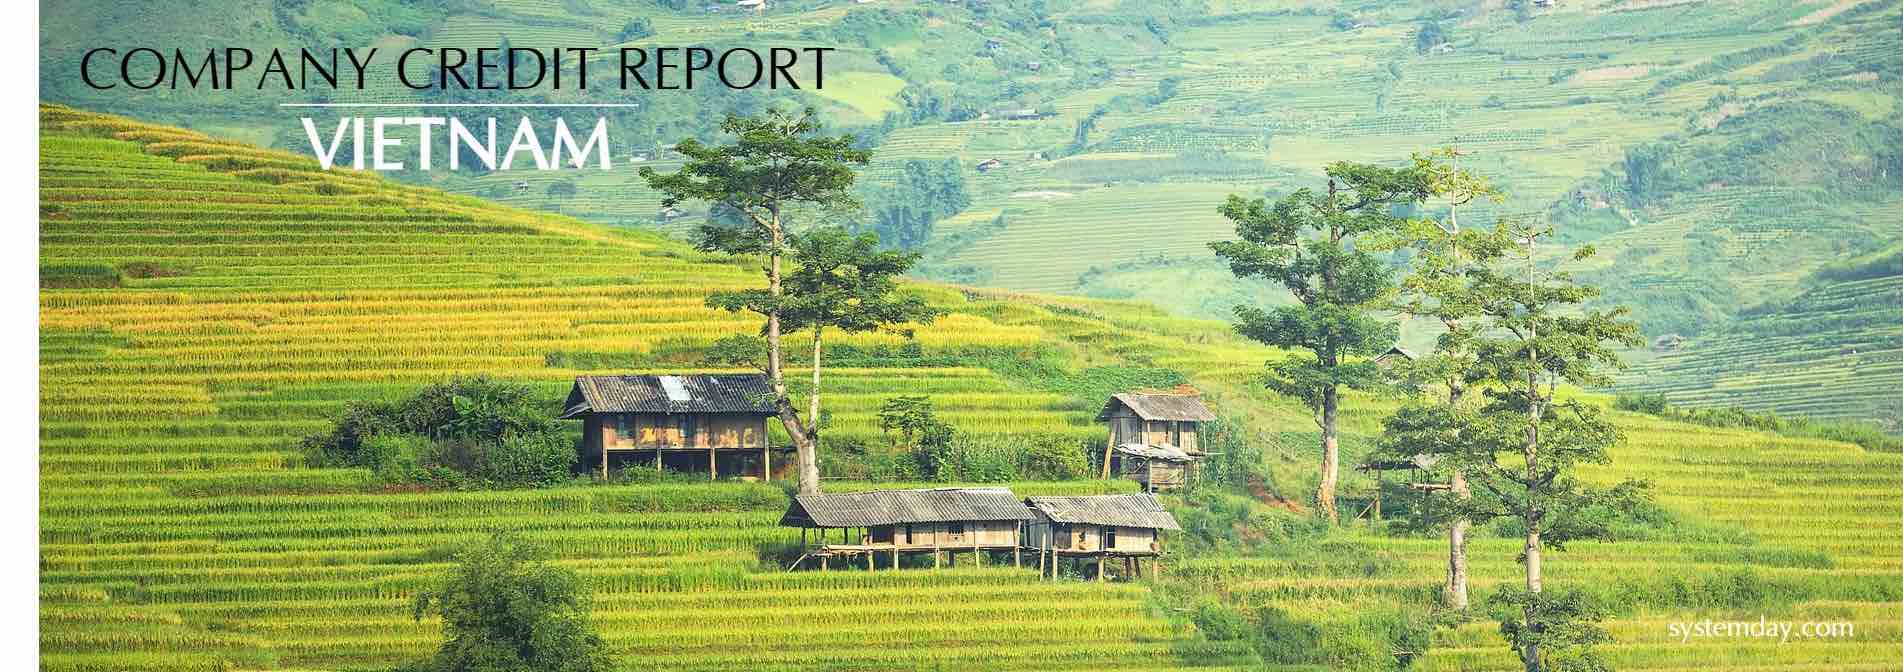 Vietnam Company Credit Report